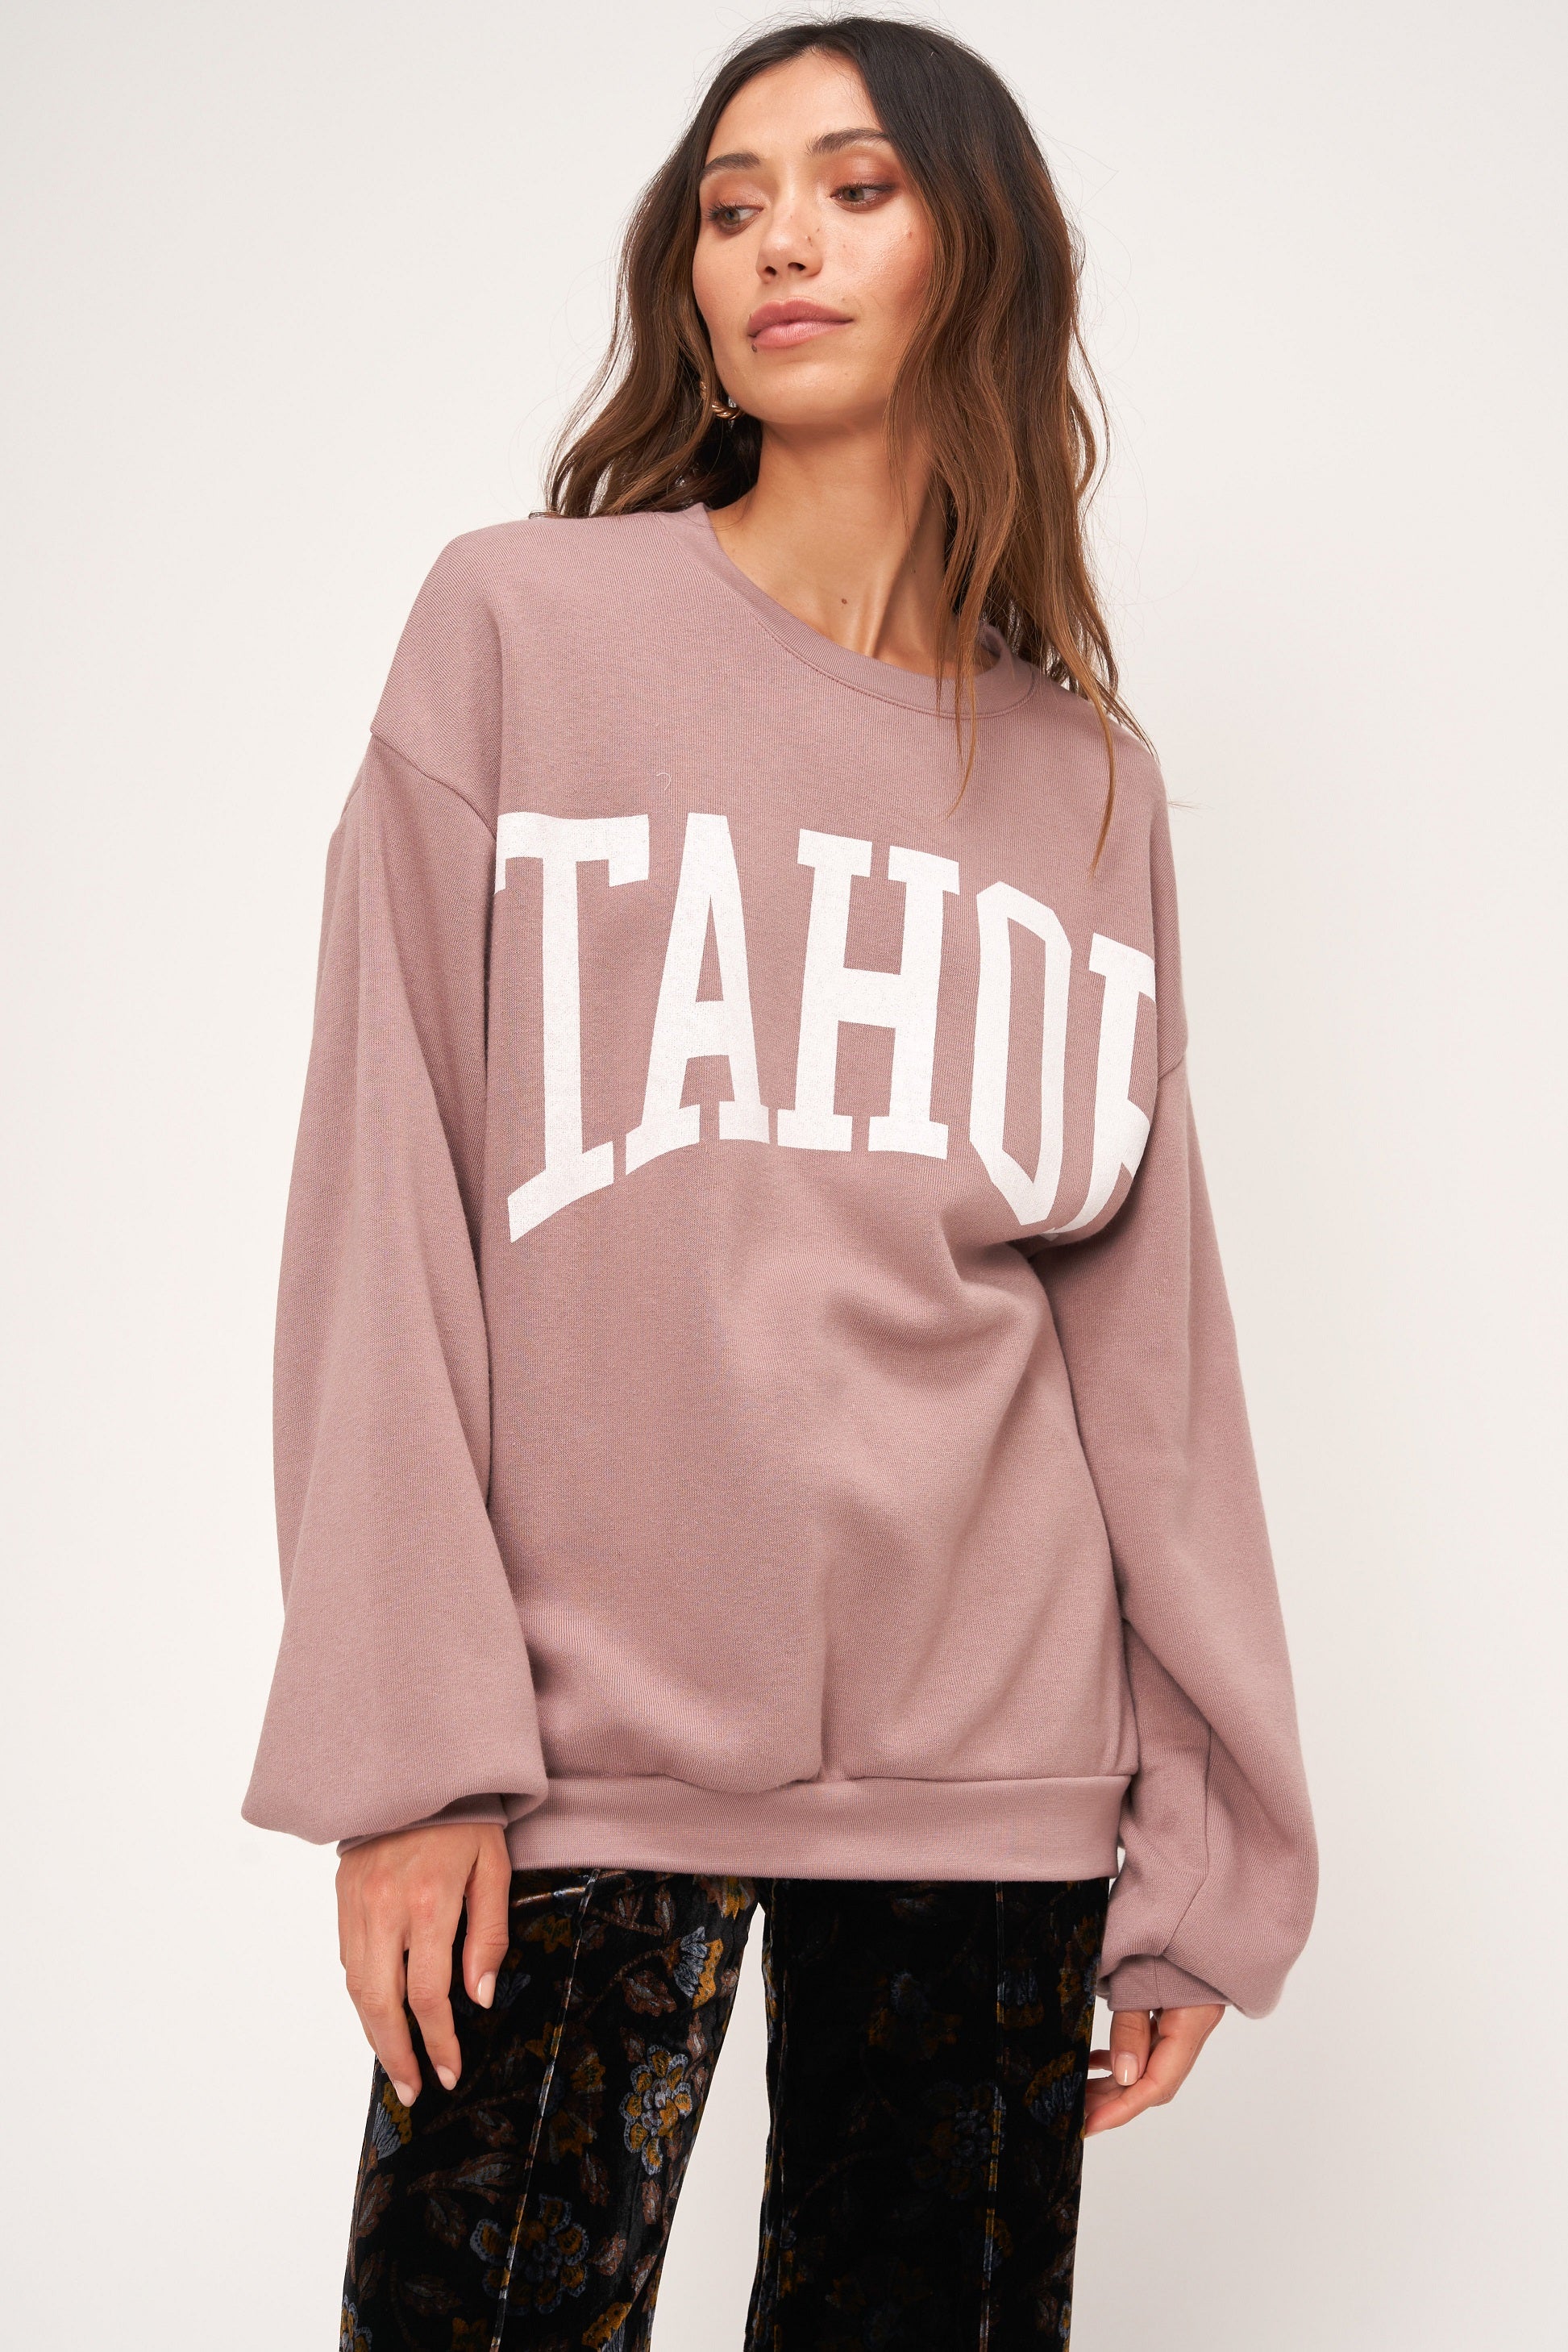 Tahoe Sweatshirt